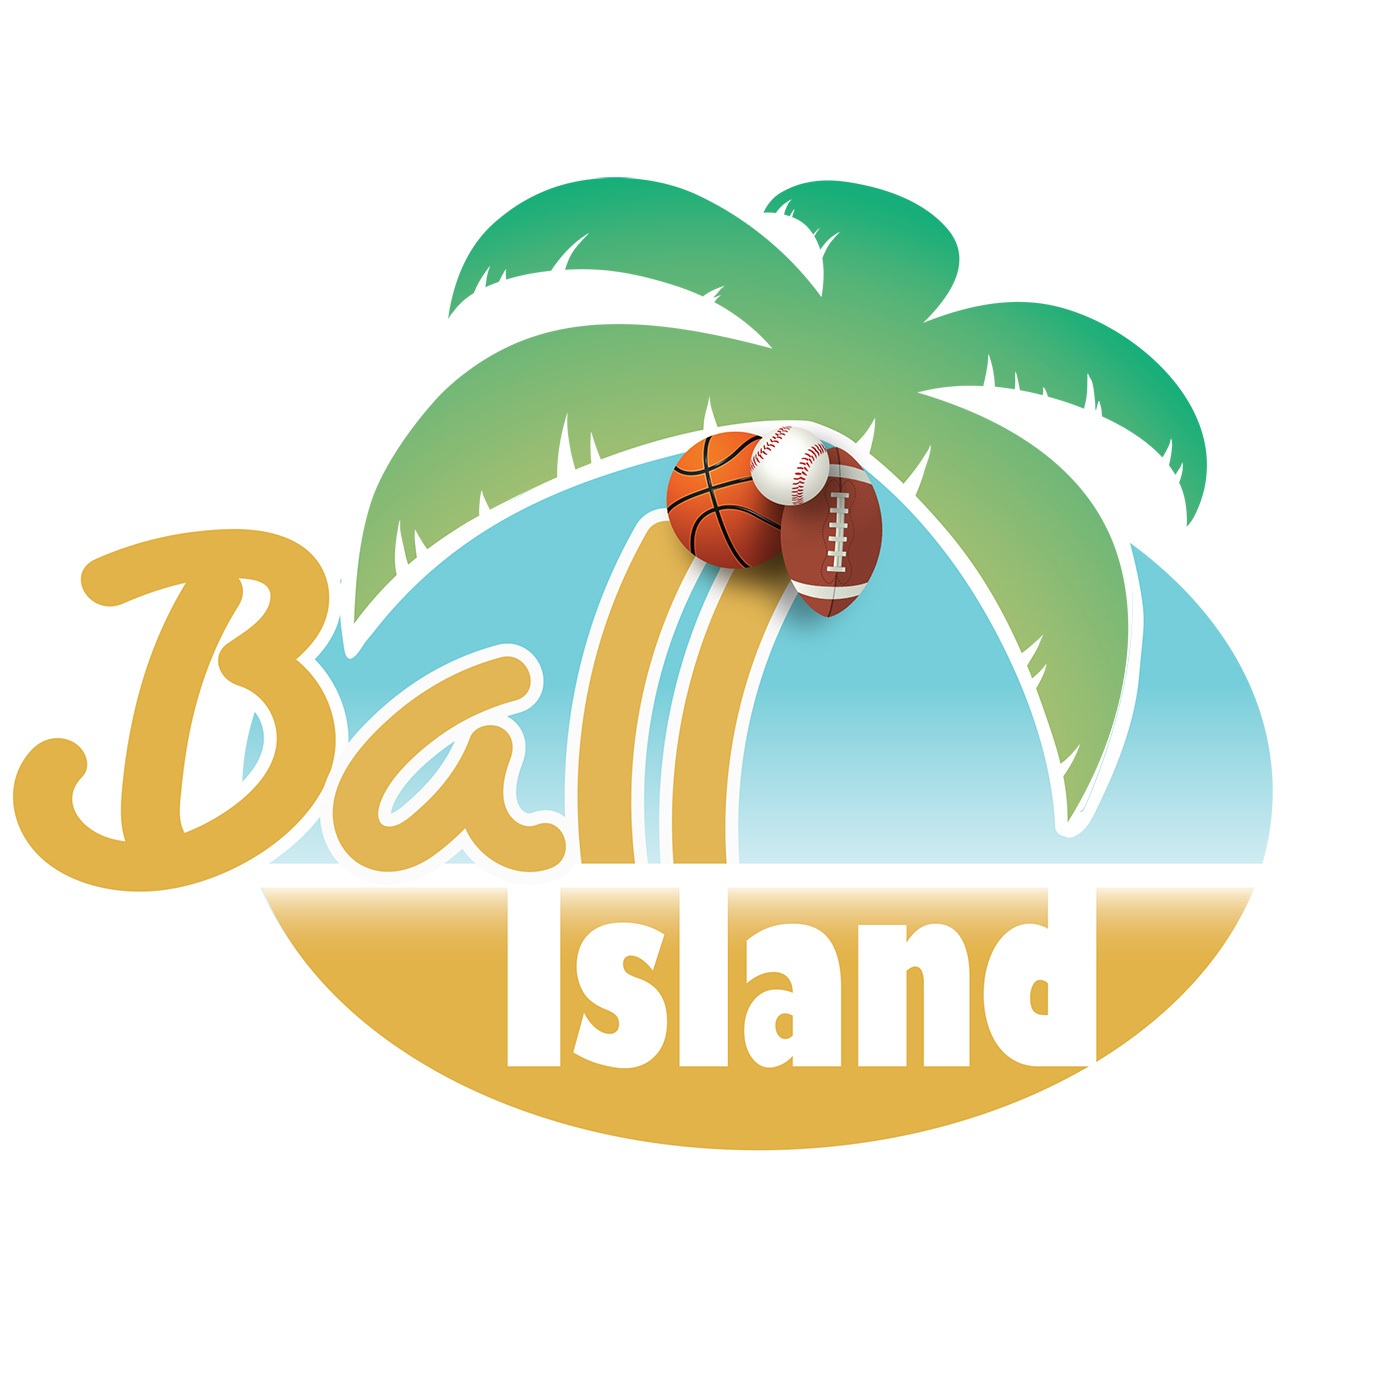 Ball Island